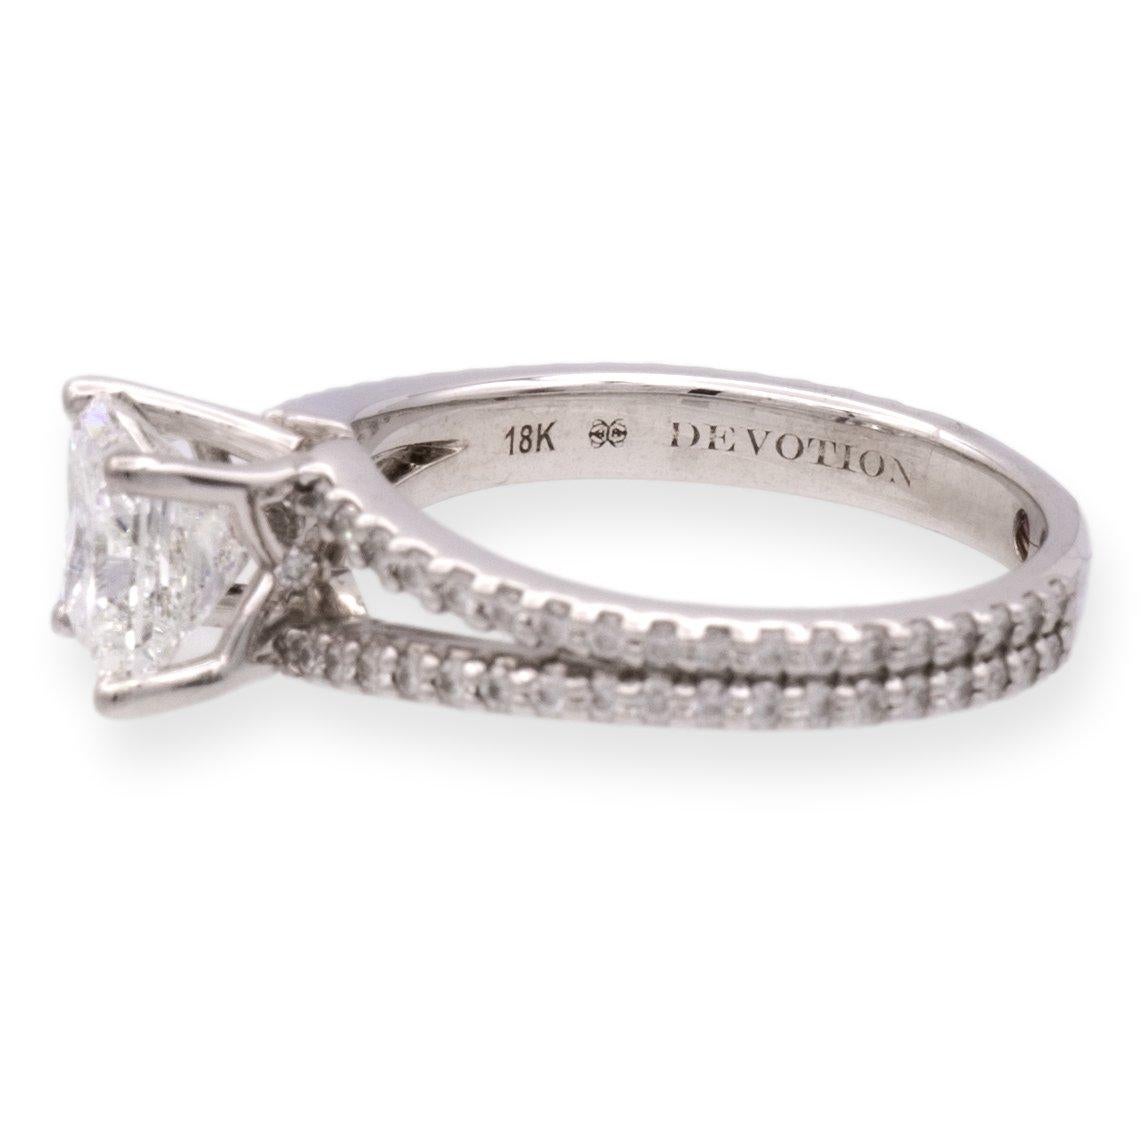 ForeverMark Devotion 18K Princess Cut Diamant Verlobungsring 1,52 Cts.FVVS2 (Moderne) im Angebot